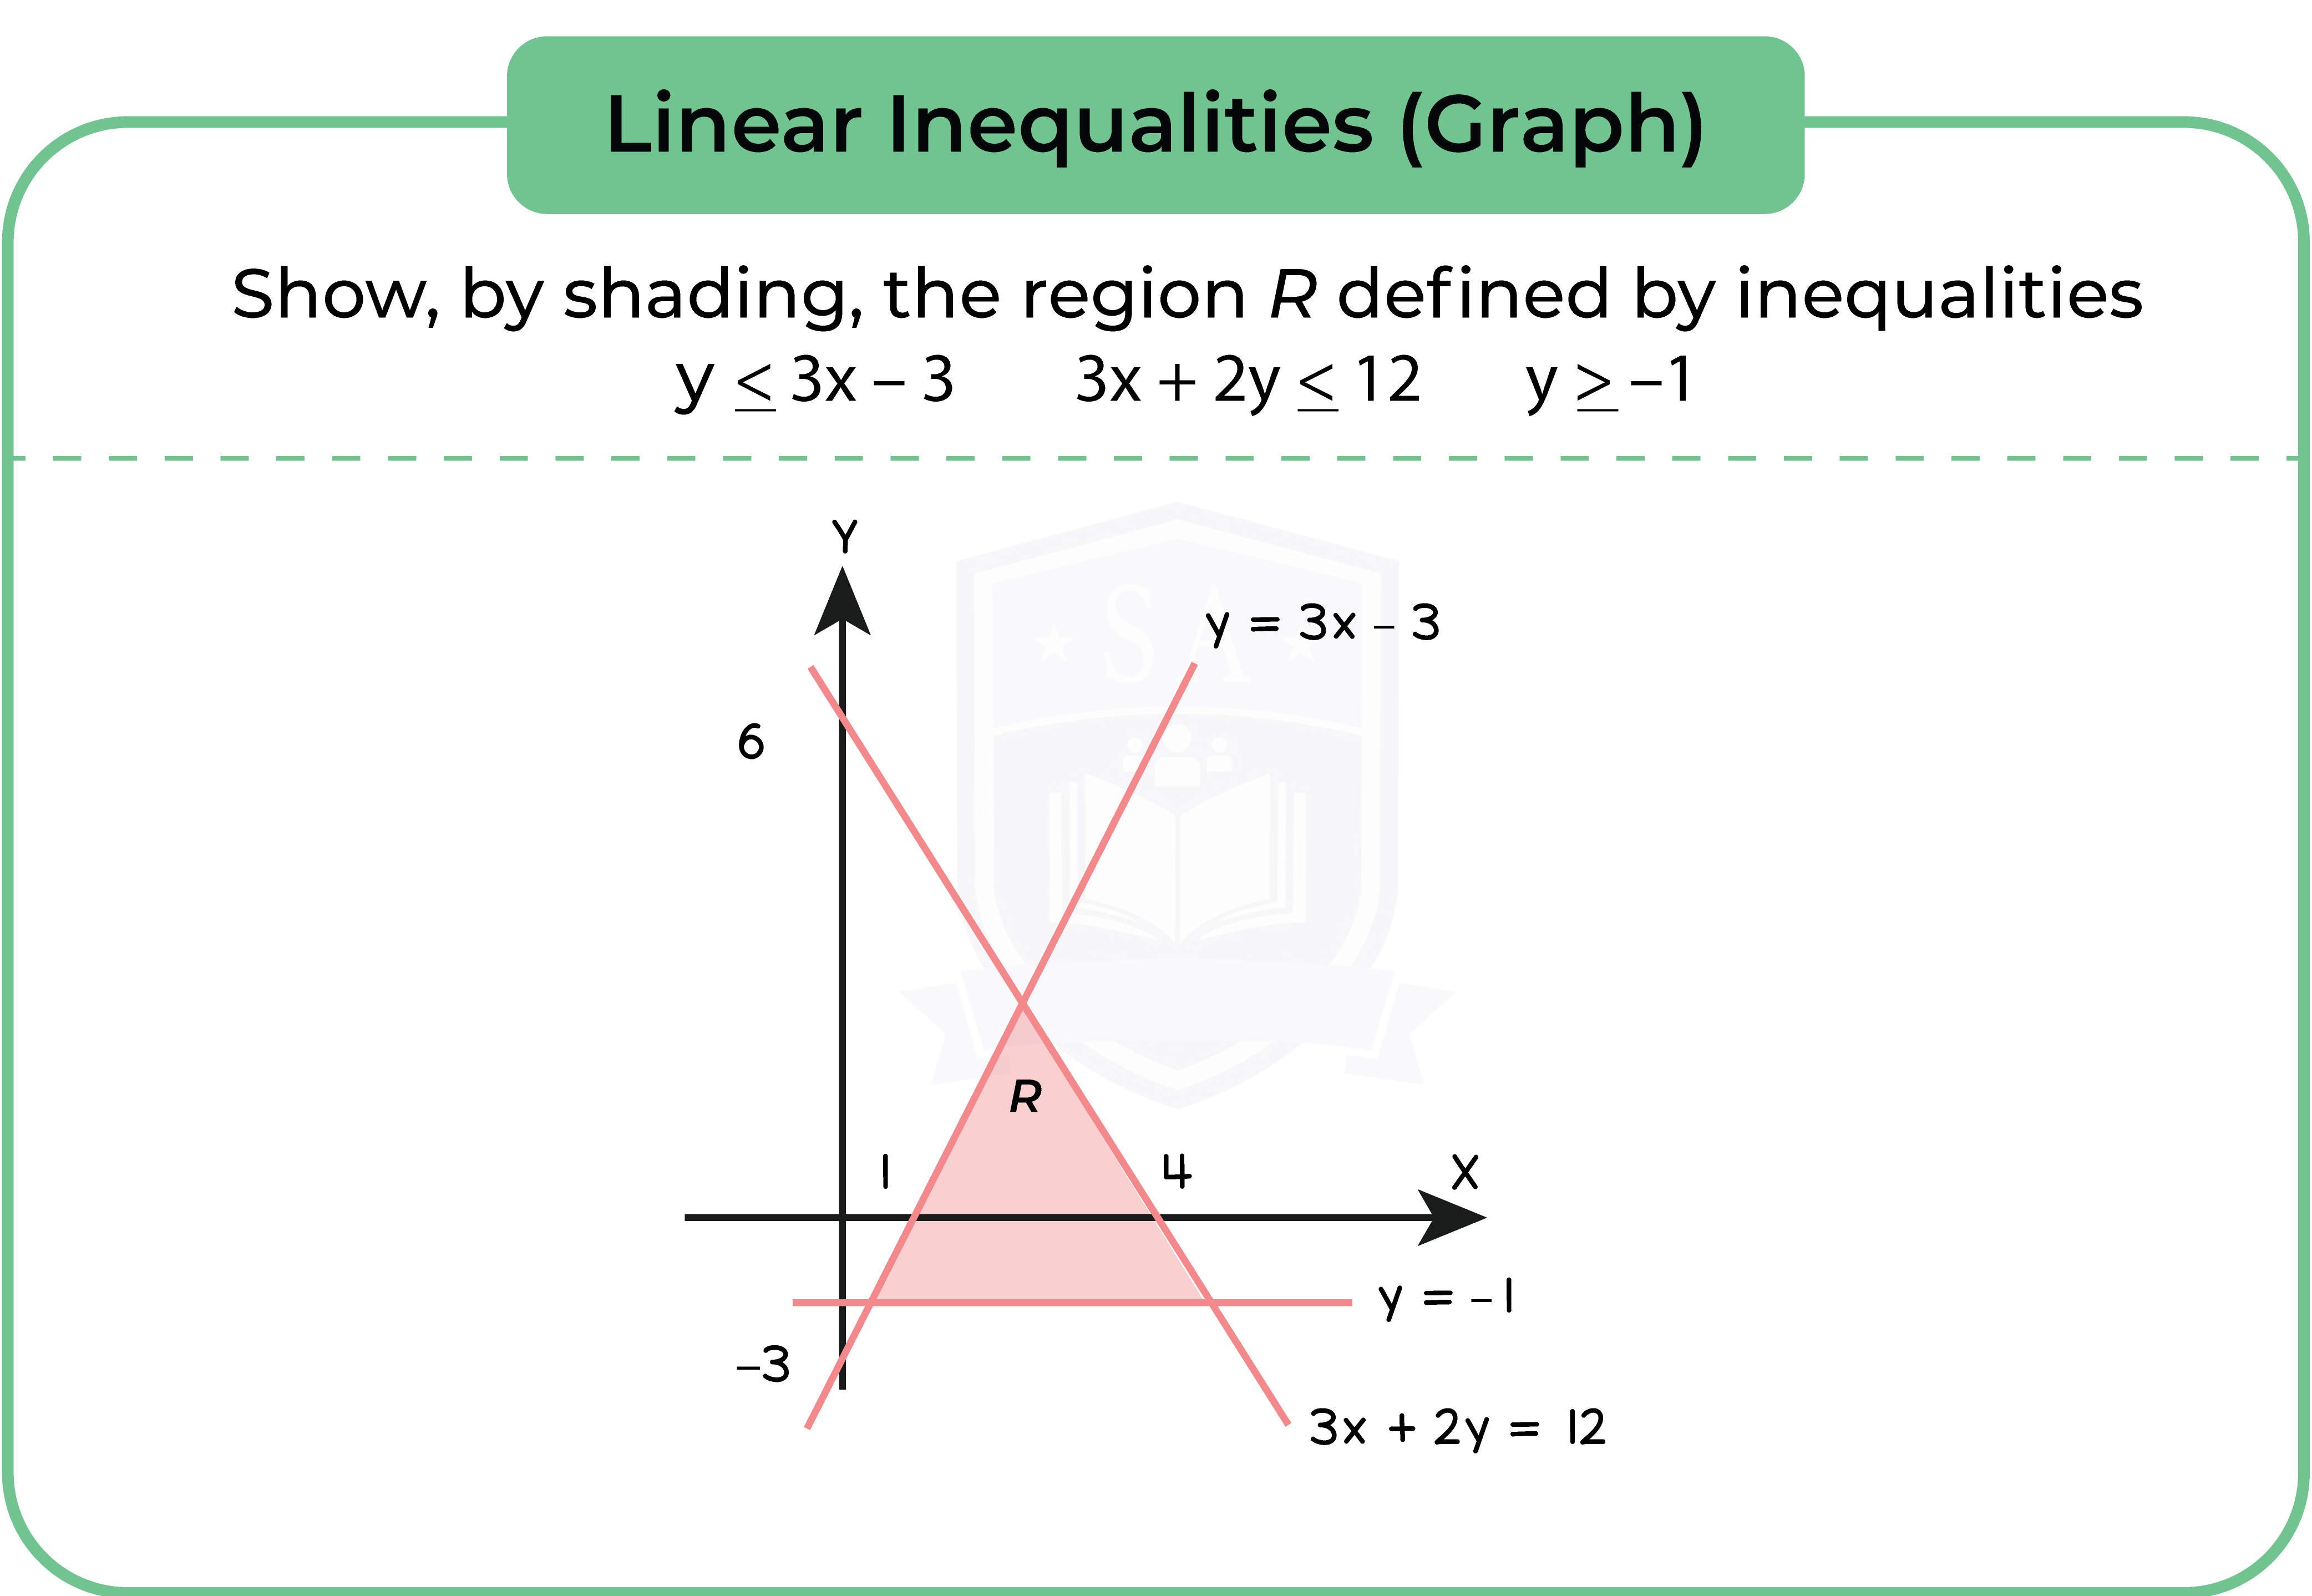 edexcel_igcse_mathematics a_topic 19_inequalities_006_linear inequalities(Graph)